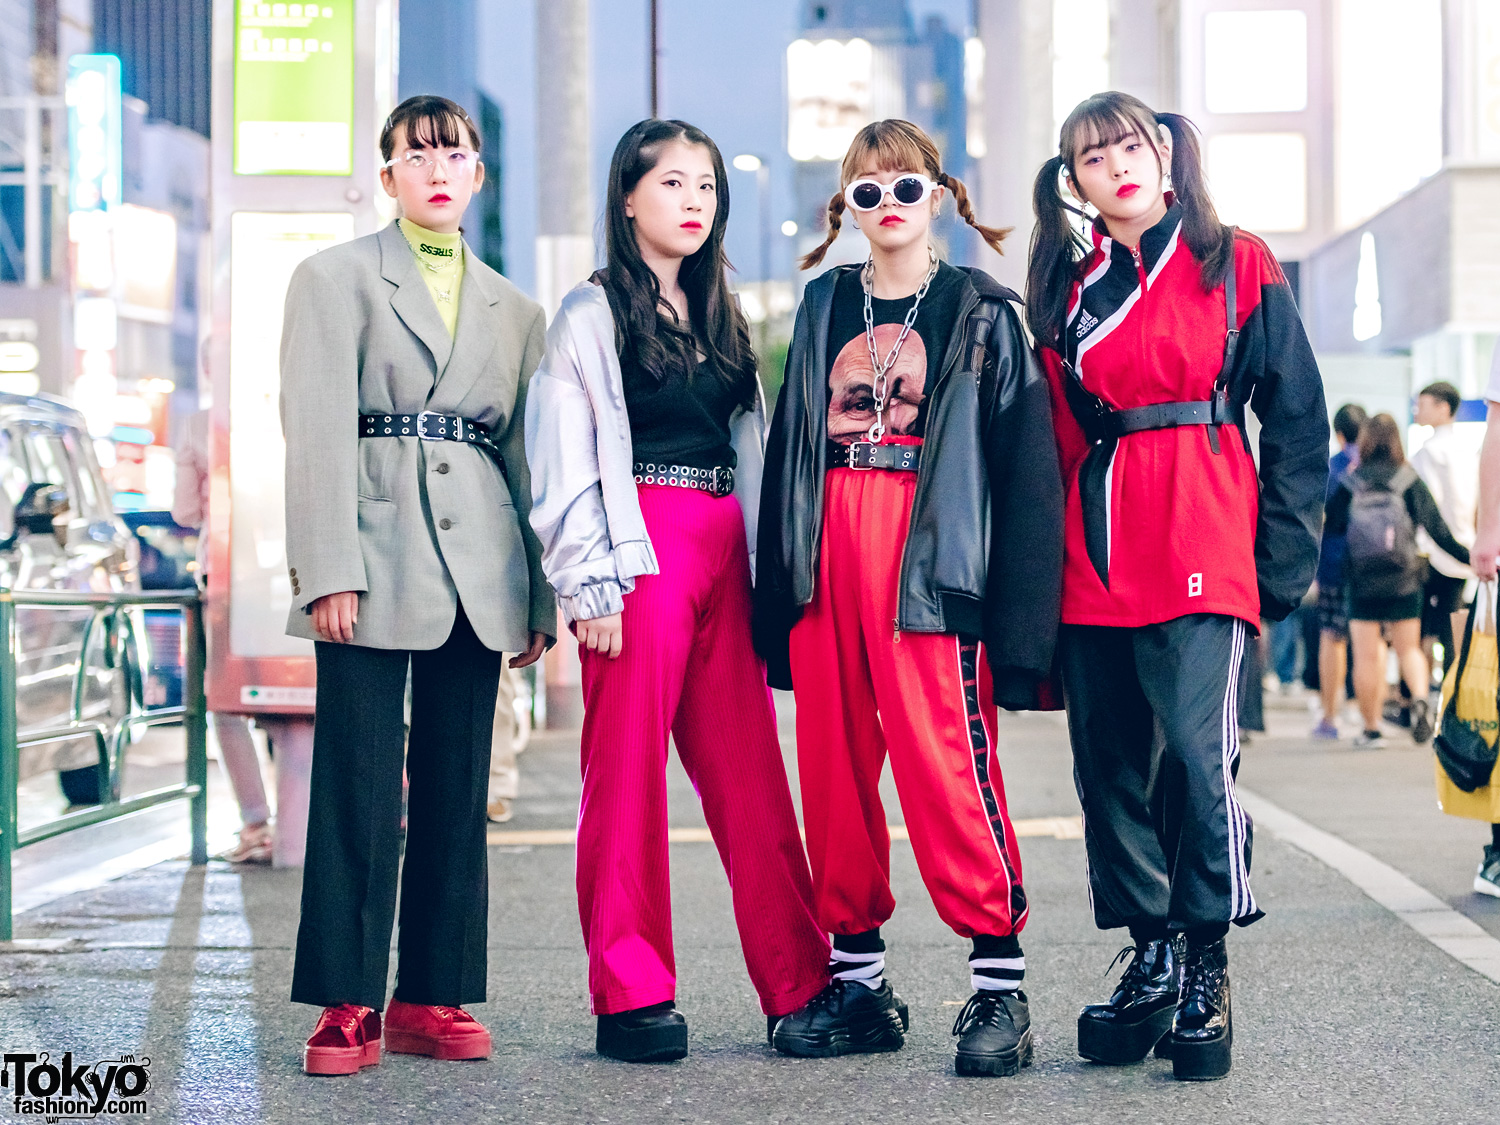 Harajuku Girl Squad in Black & Red Street Styles w/ Faith Tokyo, Adidas, Superga, H&M, Call Me Baby, Puma & Bubbles